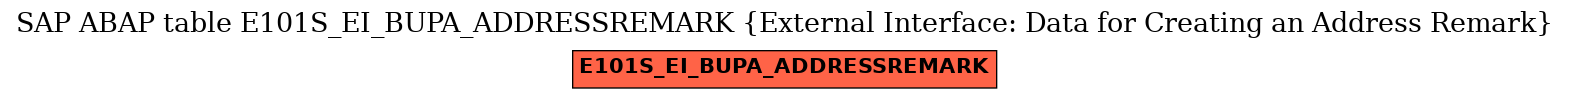 E-R Diagram for table E101S_EI_BUPA_ADDRESSREMARK (External Interface: Data for Creating an Address Remark)